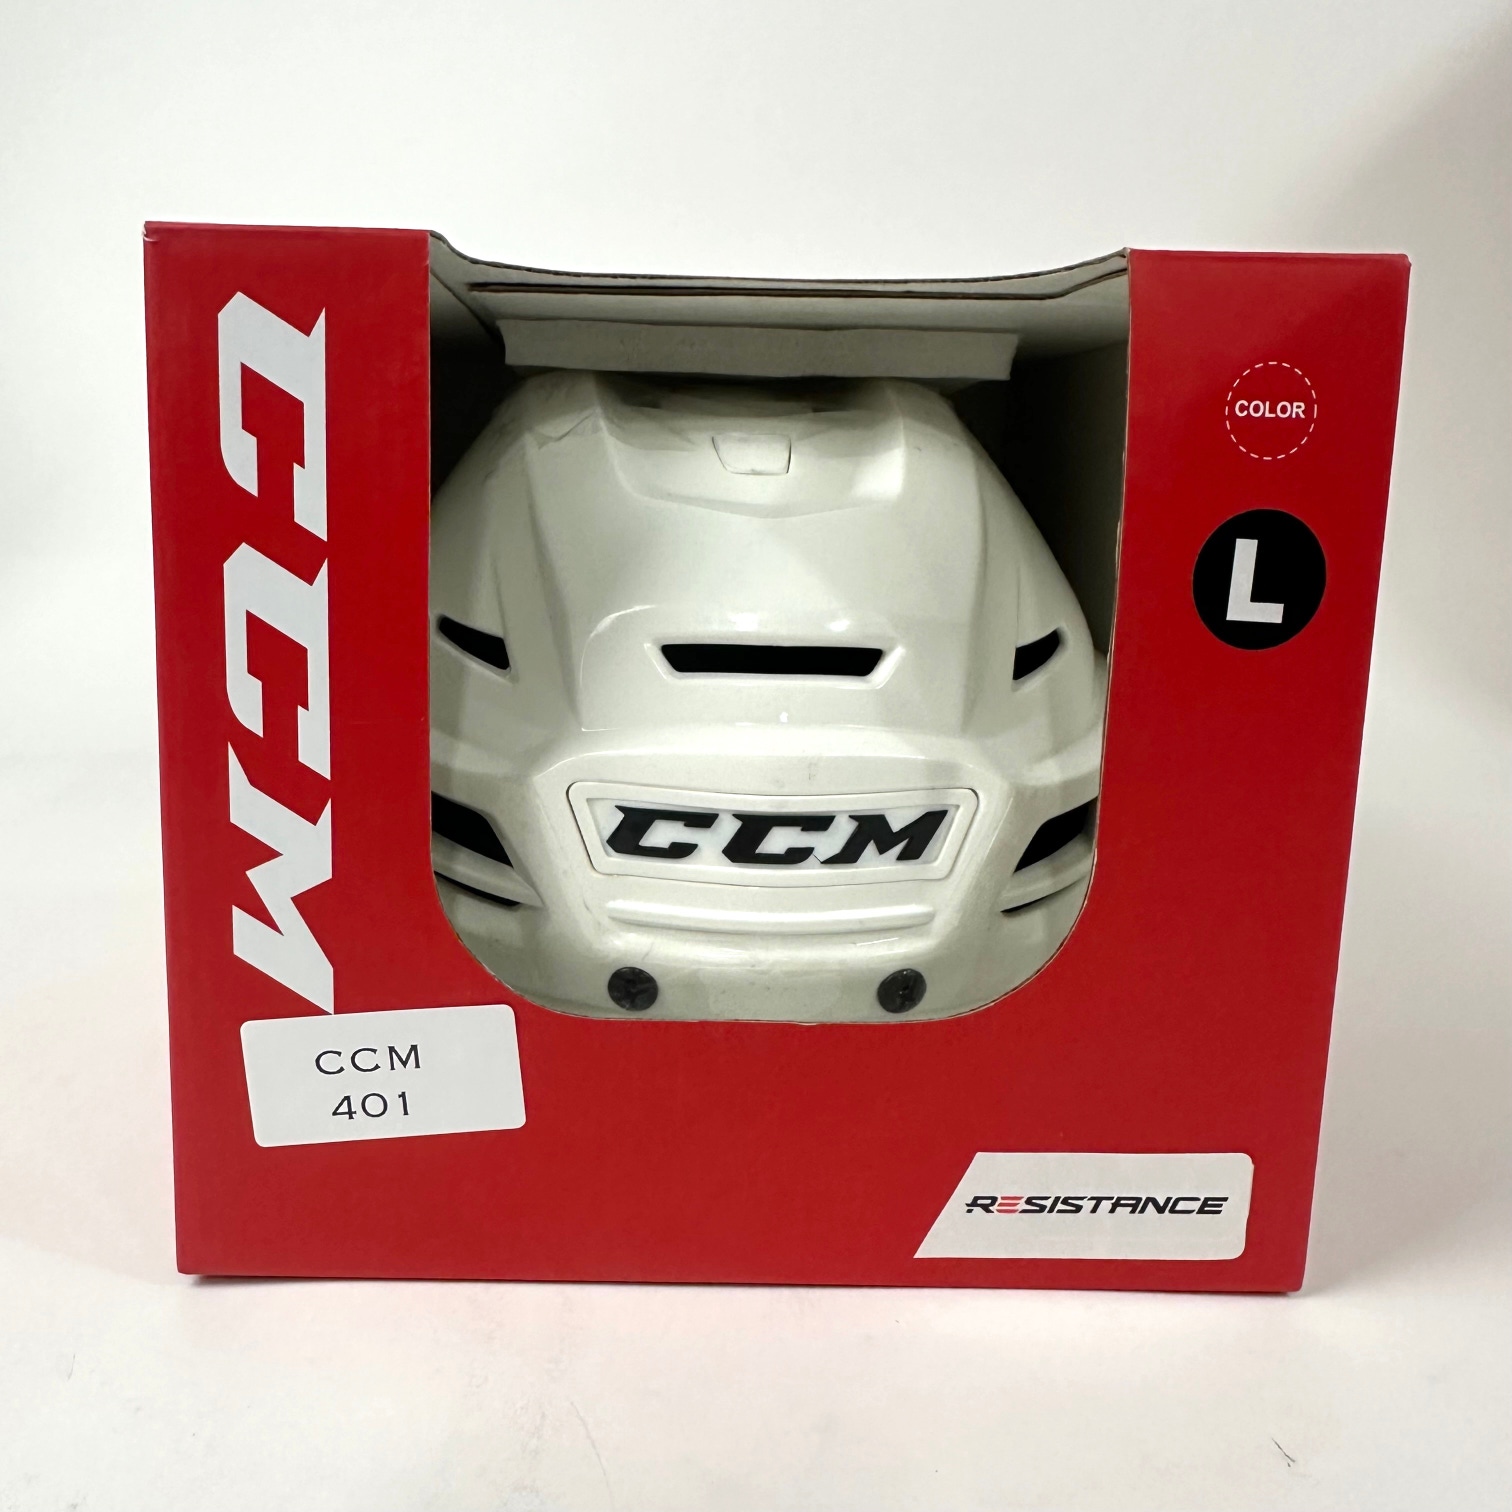 Brand New CCM Resistance Helmet in Box - White - Large